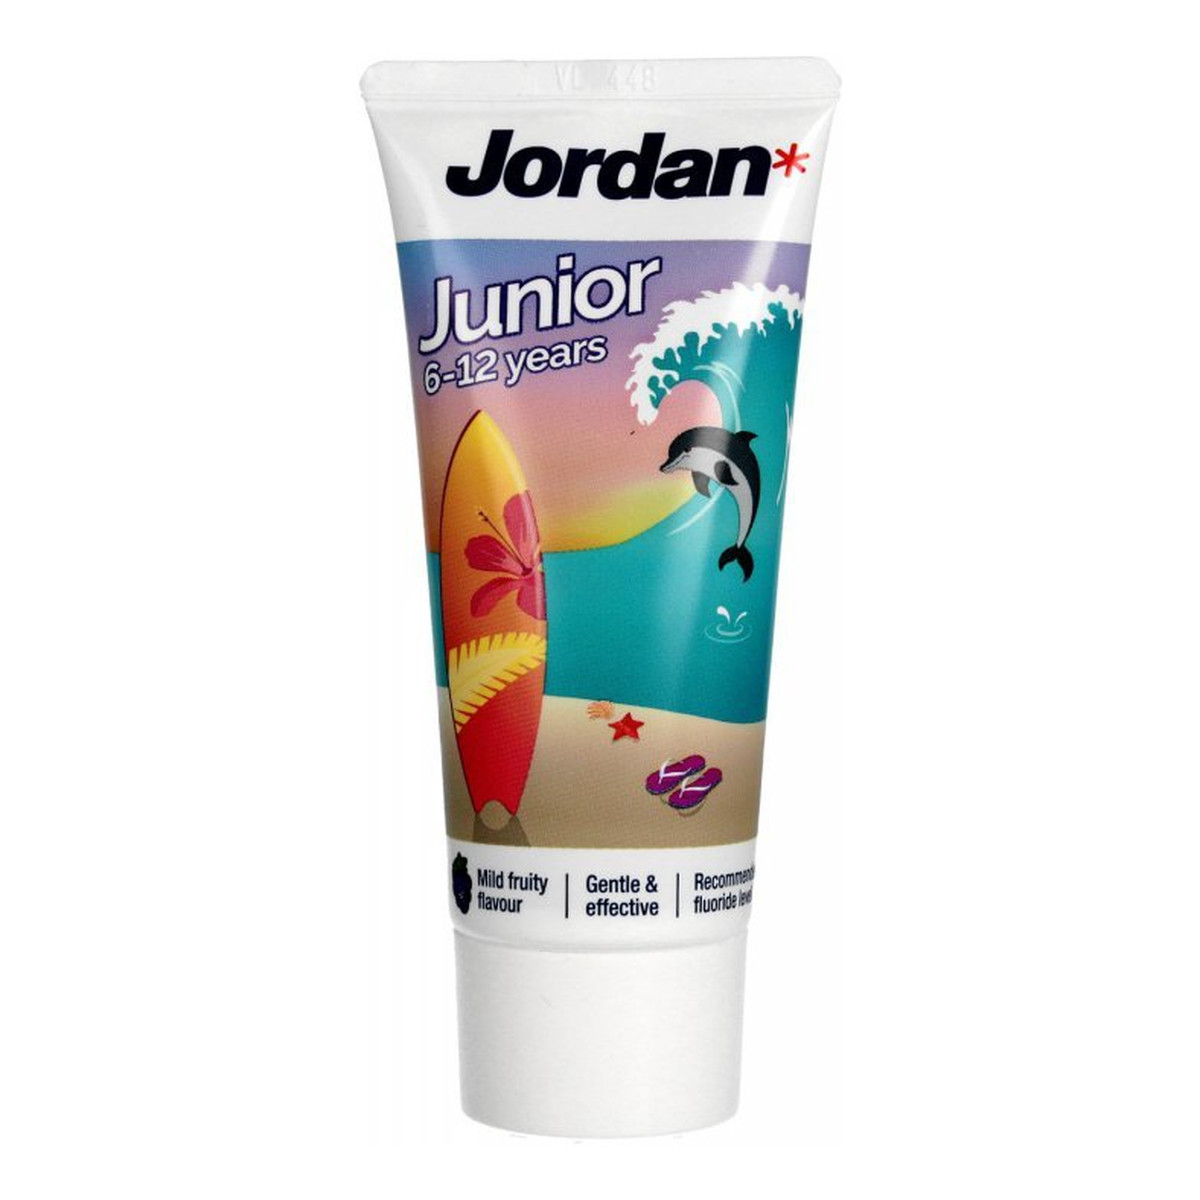 Jordan Junior Pasta do zębów dla dzieci 6-12 lat 50ml